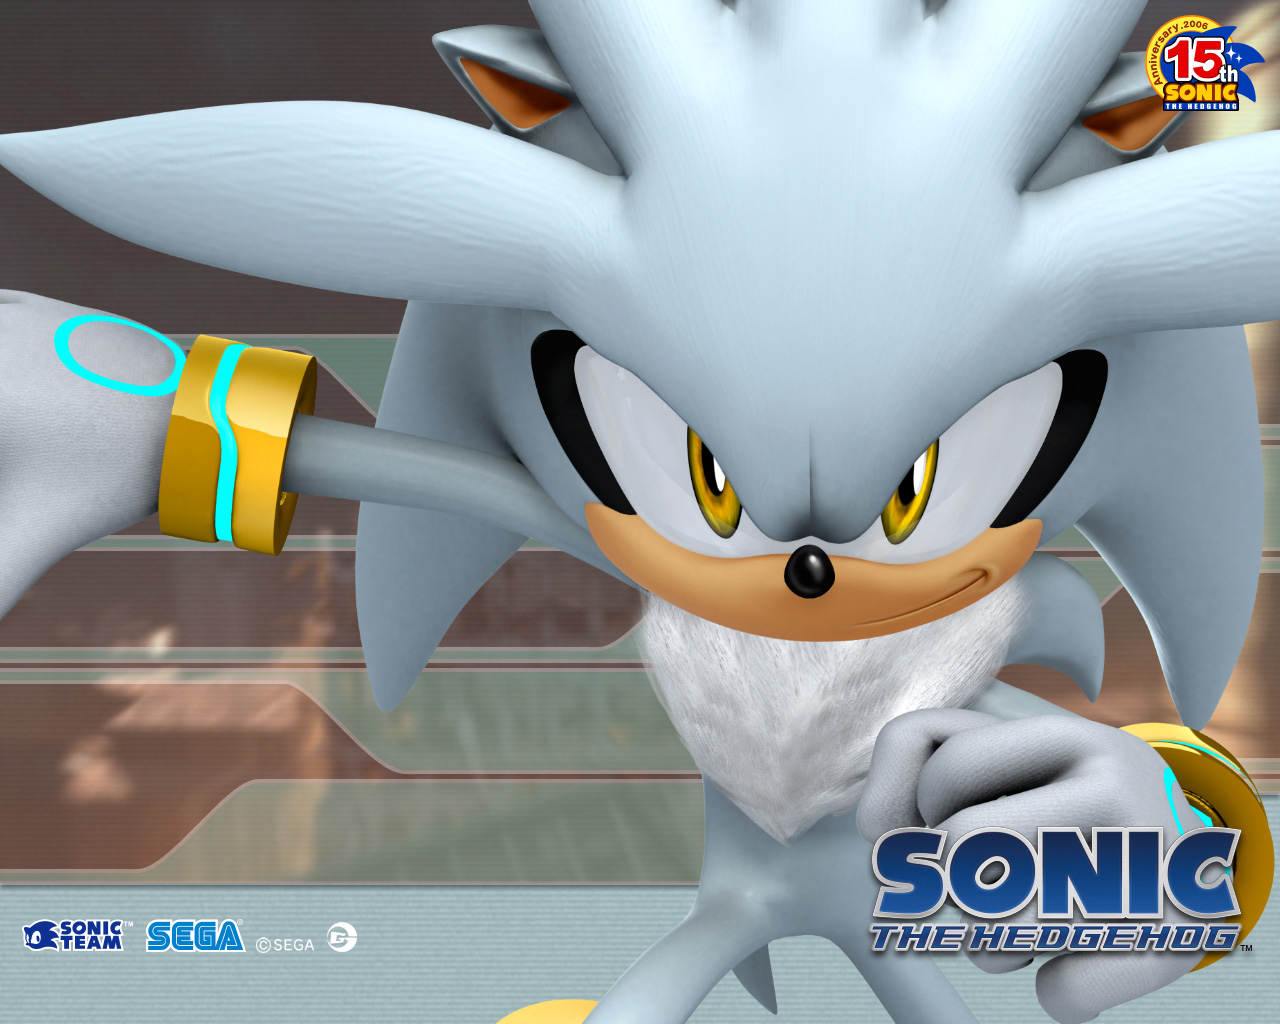 Sonic the Hedgehog (2006)